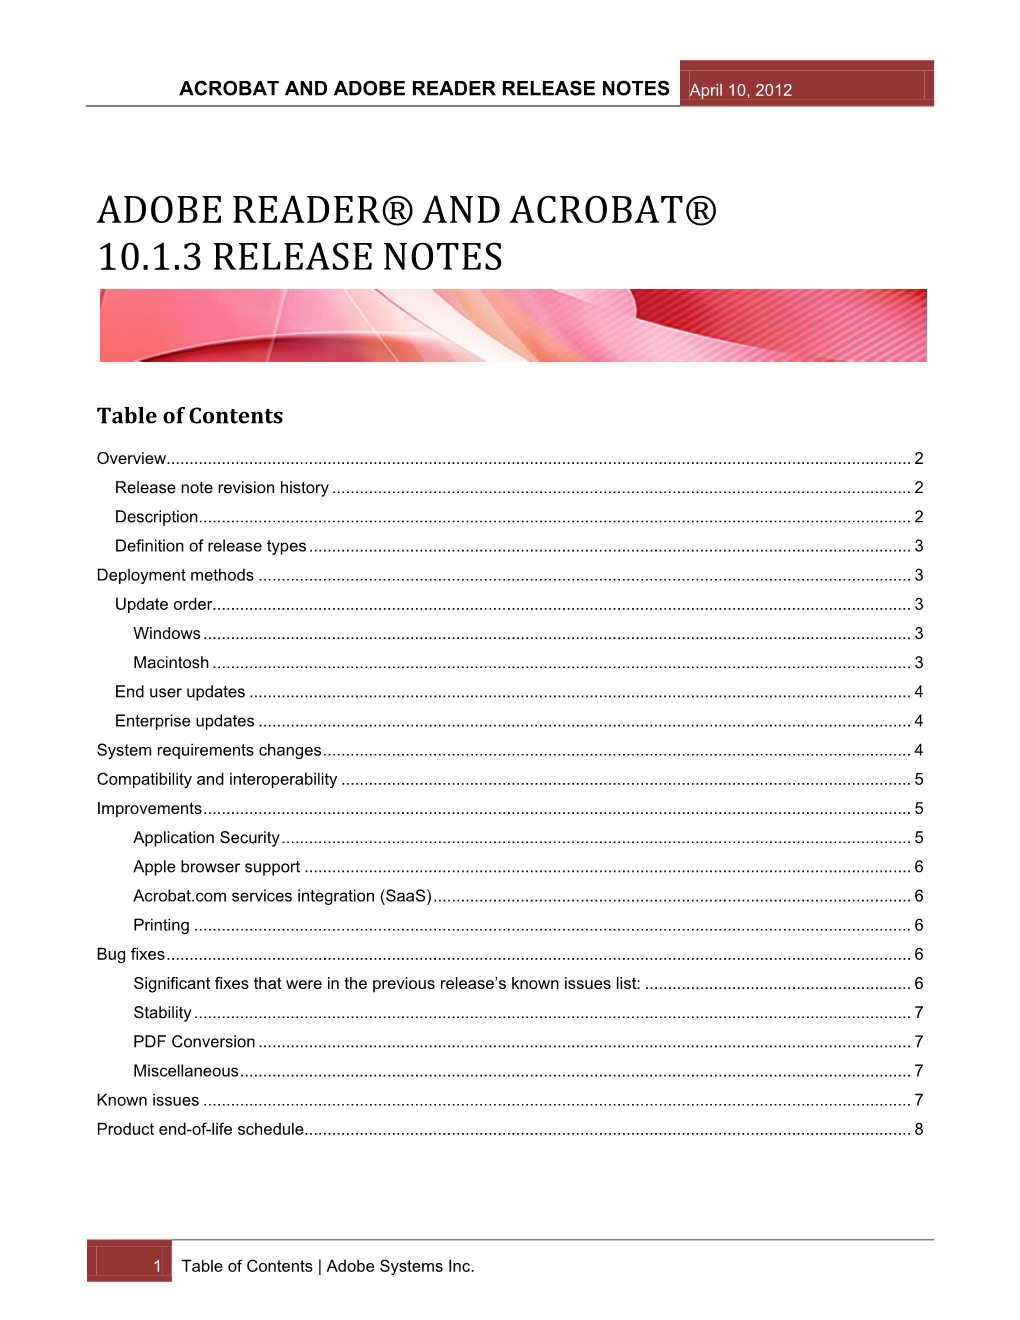 ACROBAT and ADOBE READER RELEASE NOTES April 10, 2012